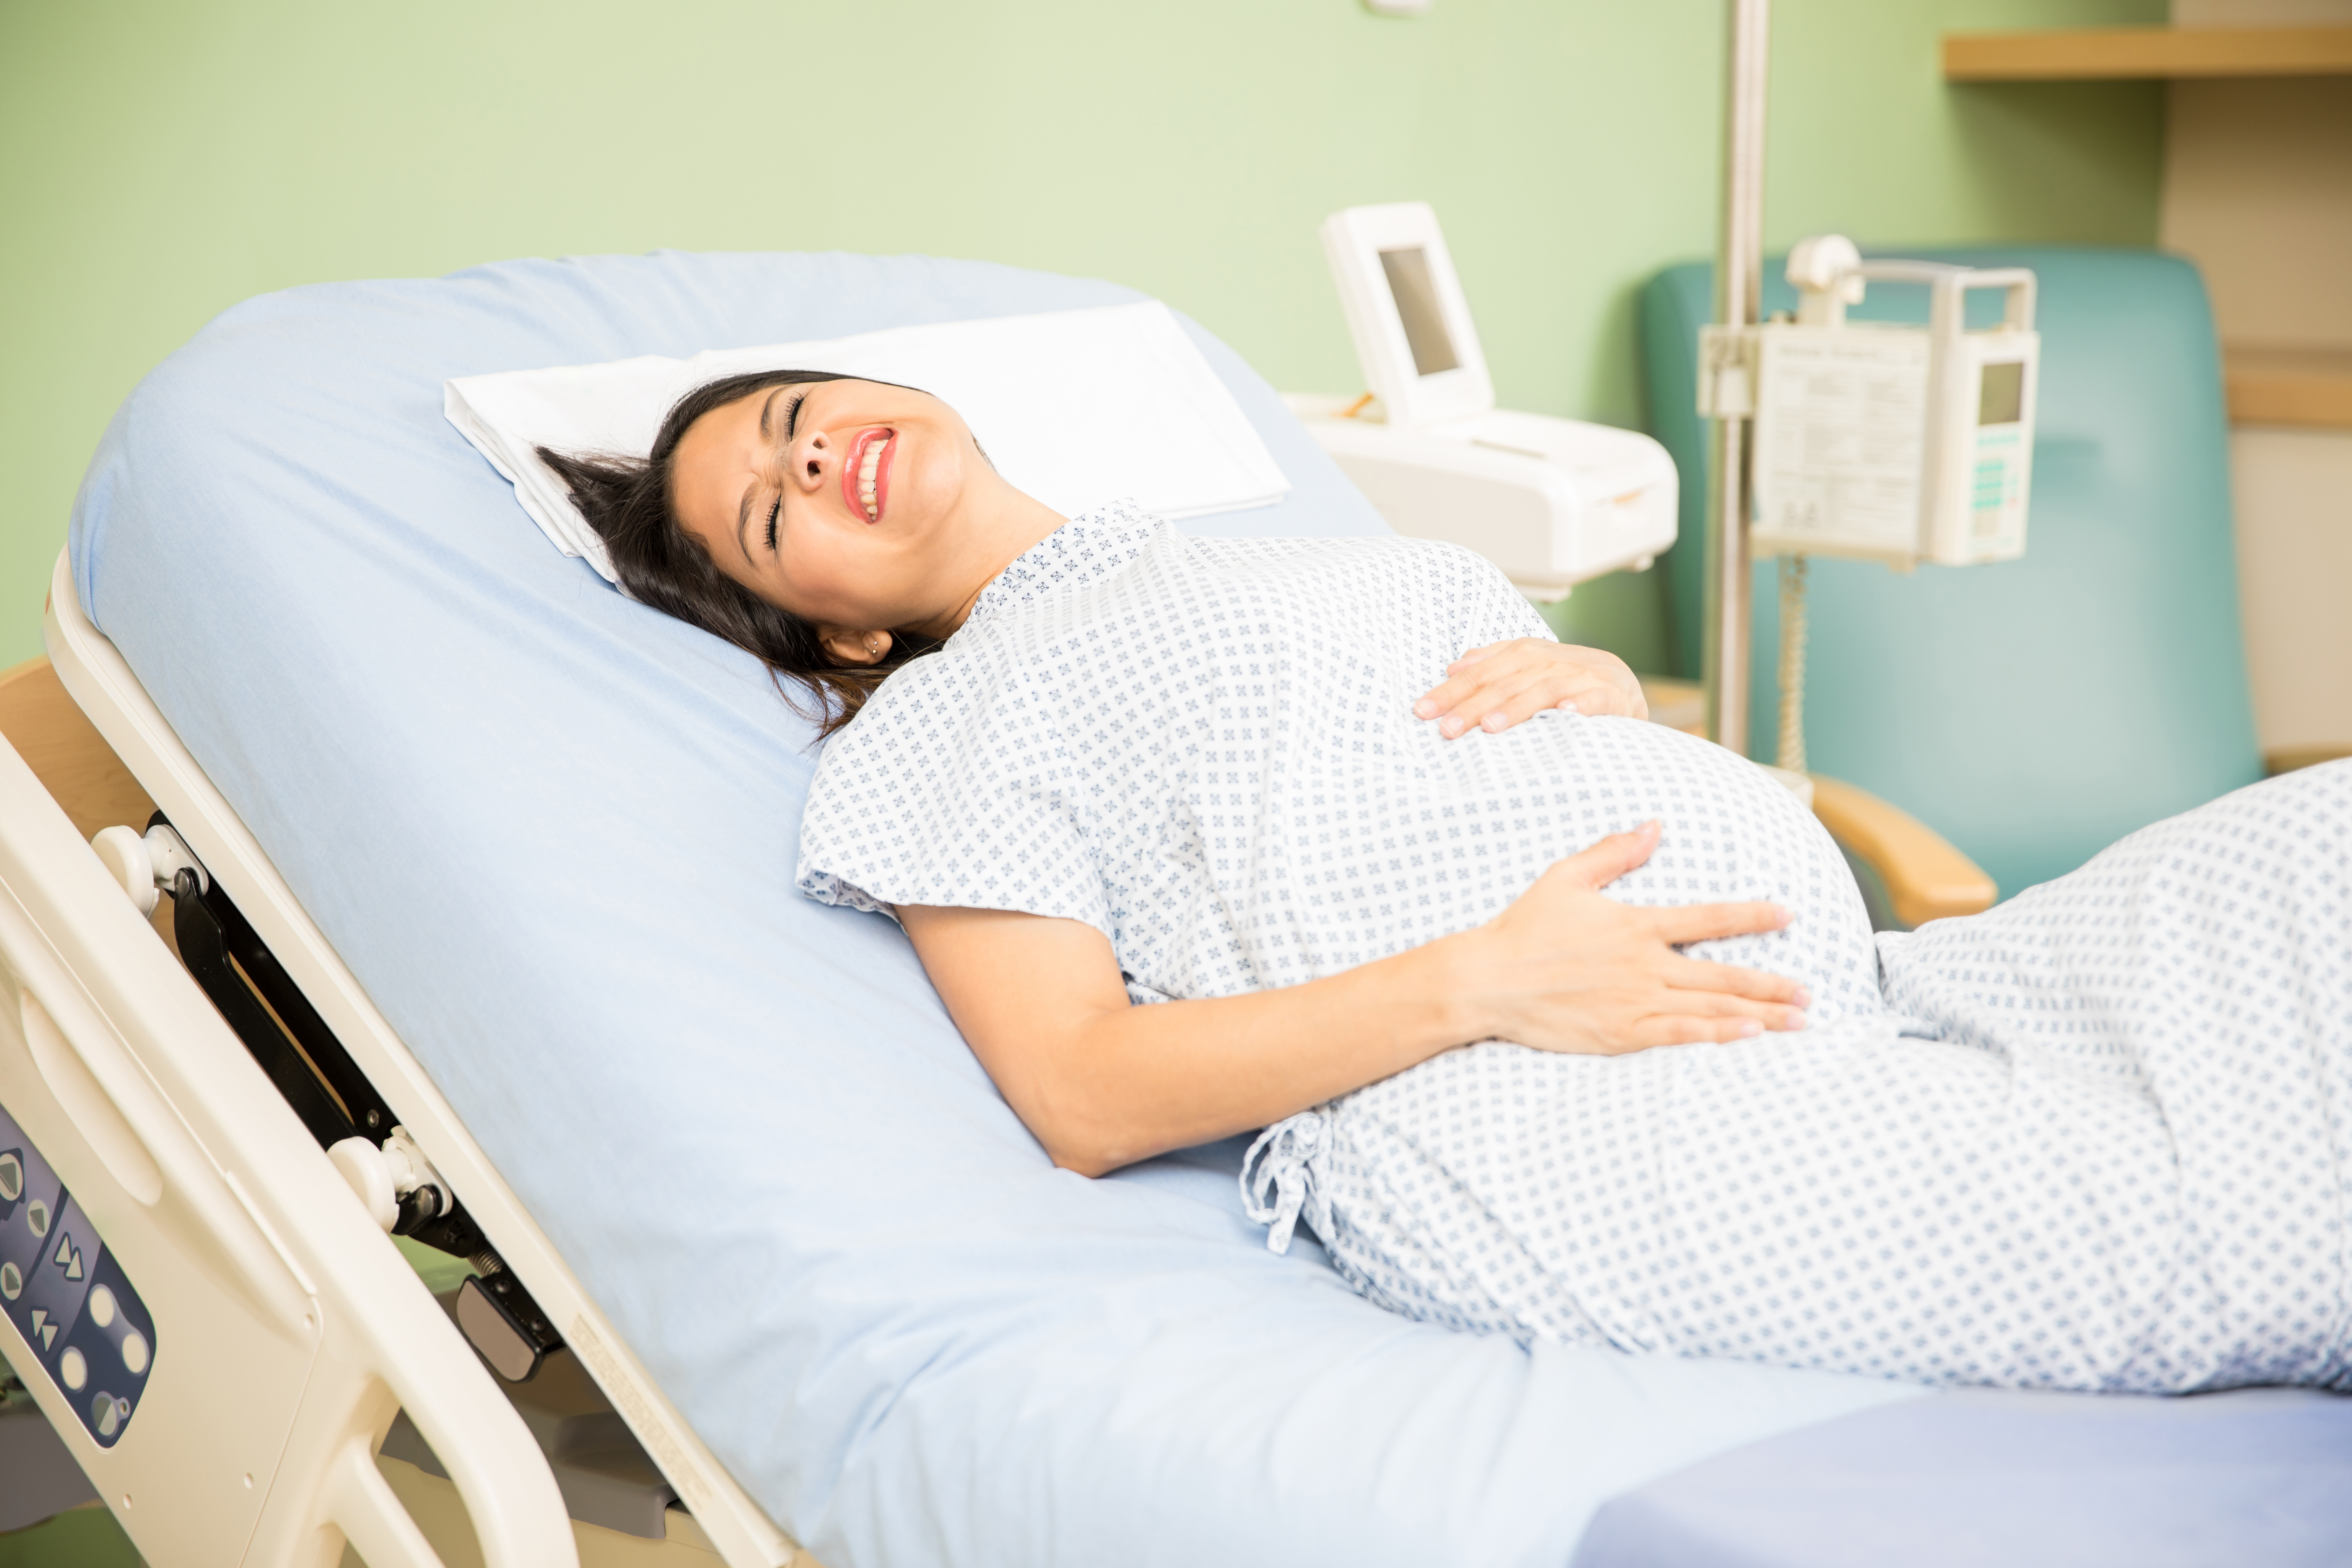 A woman in labor | Source: Shutterstock